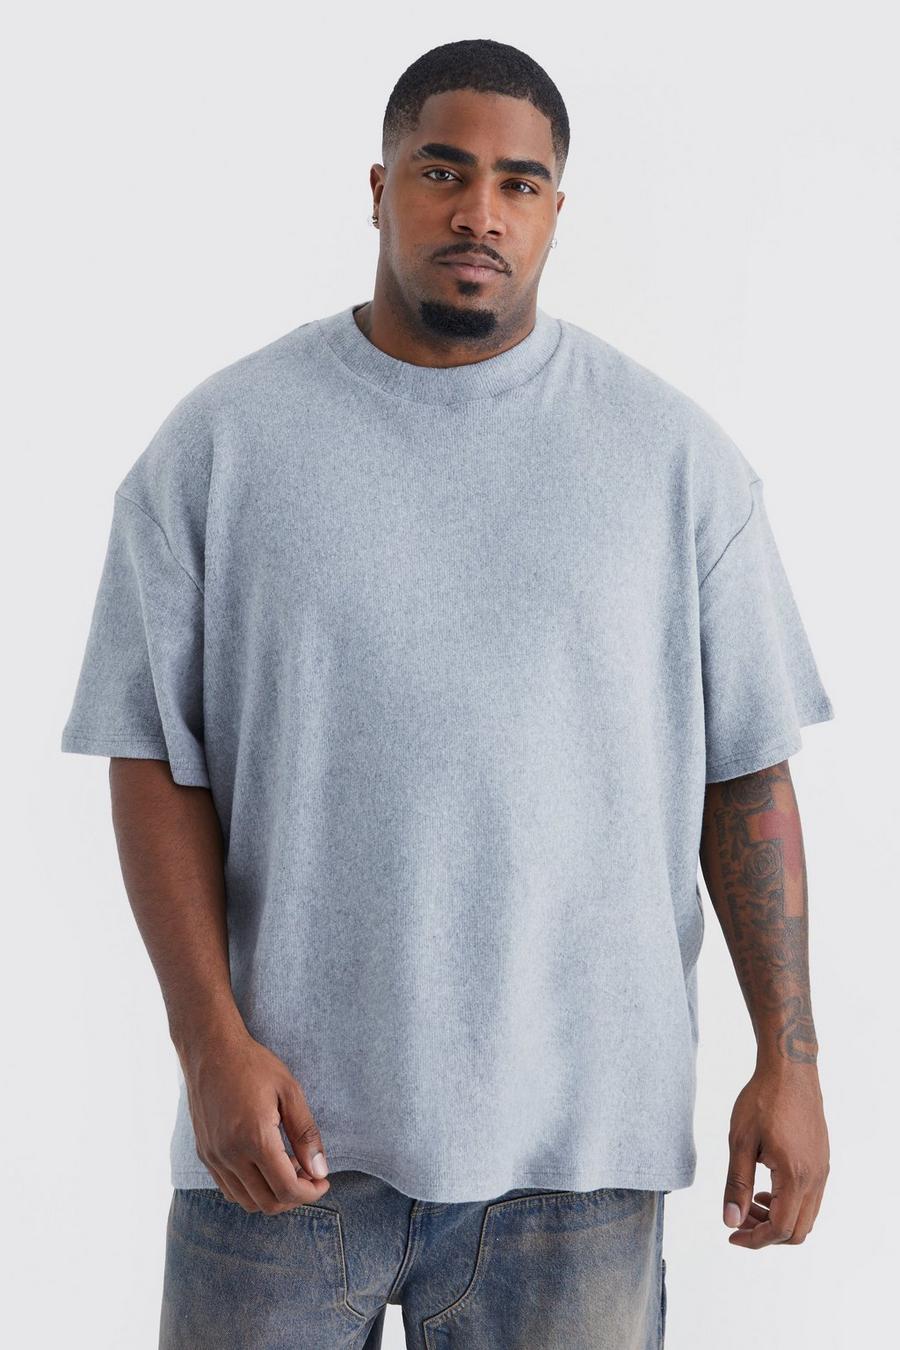 MAN Collection T-Shirts & Vests For Men | boohoo UK